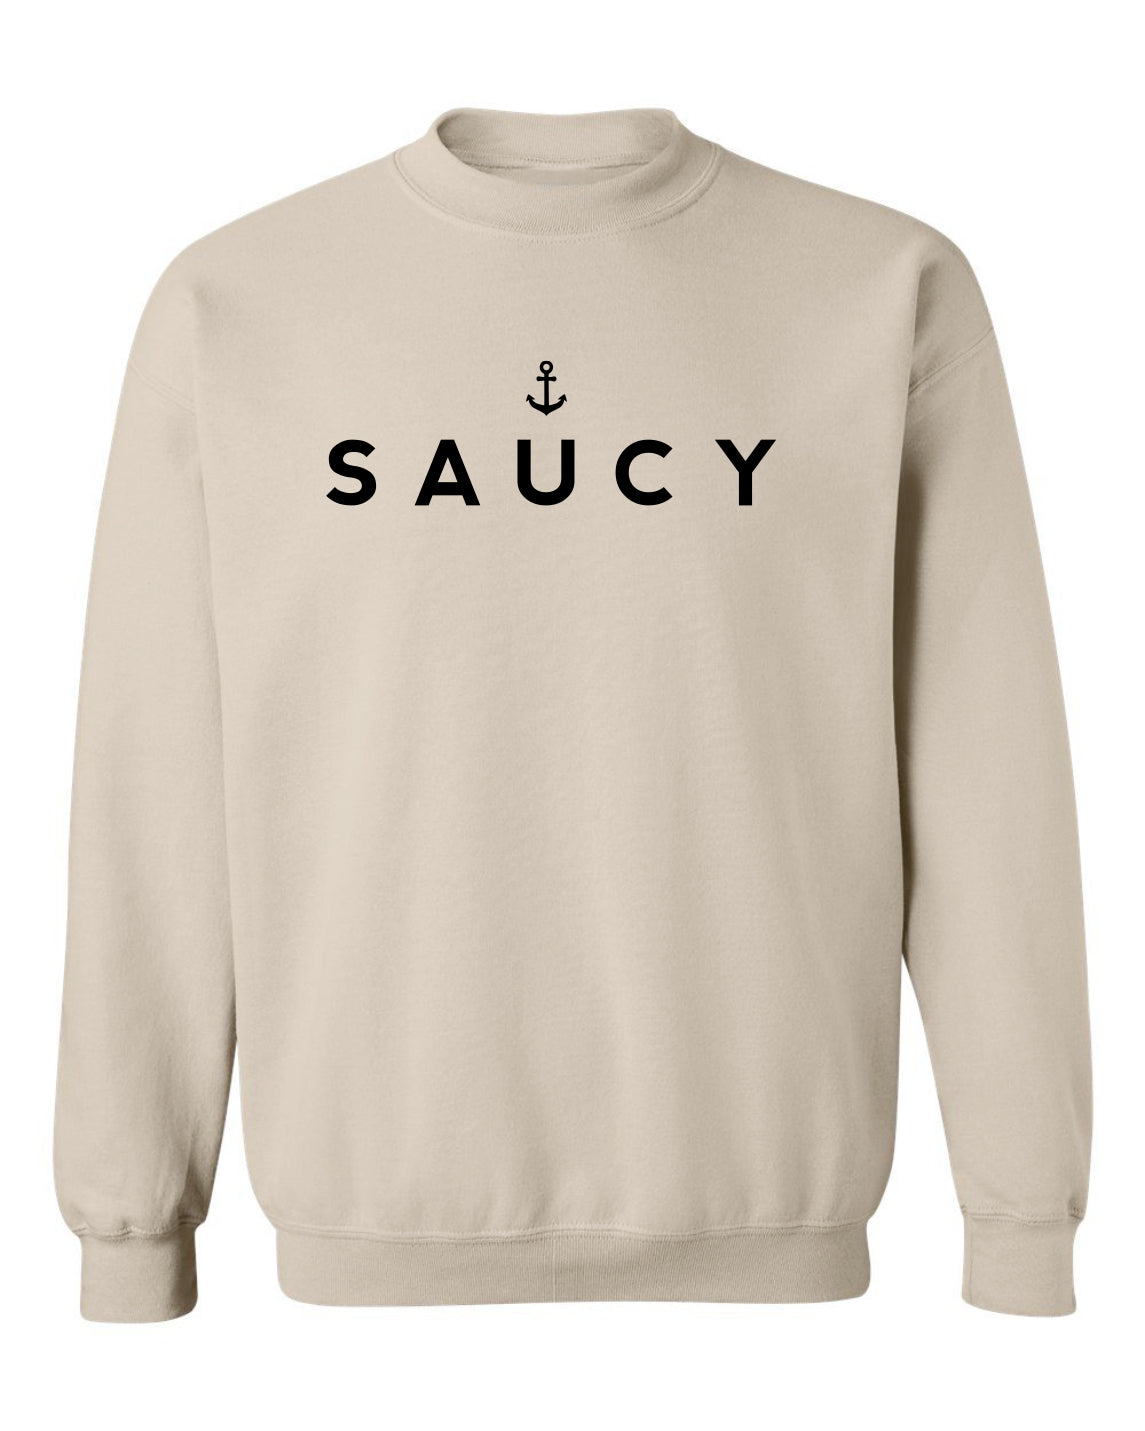 "Saucy" Unisex Crewneck Sweatshirt